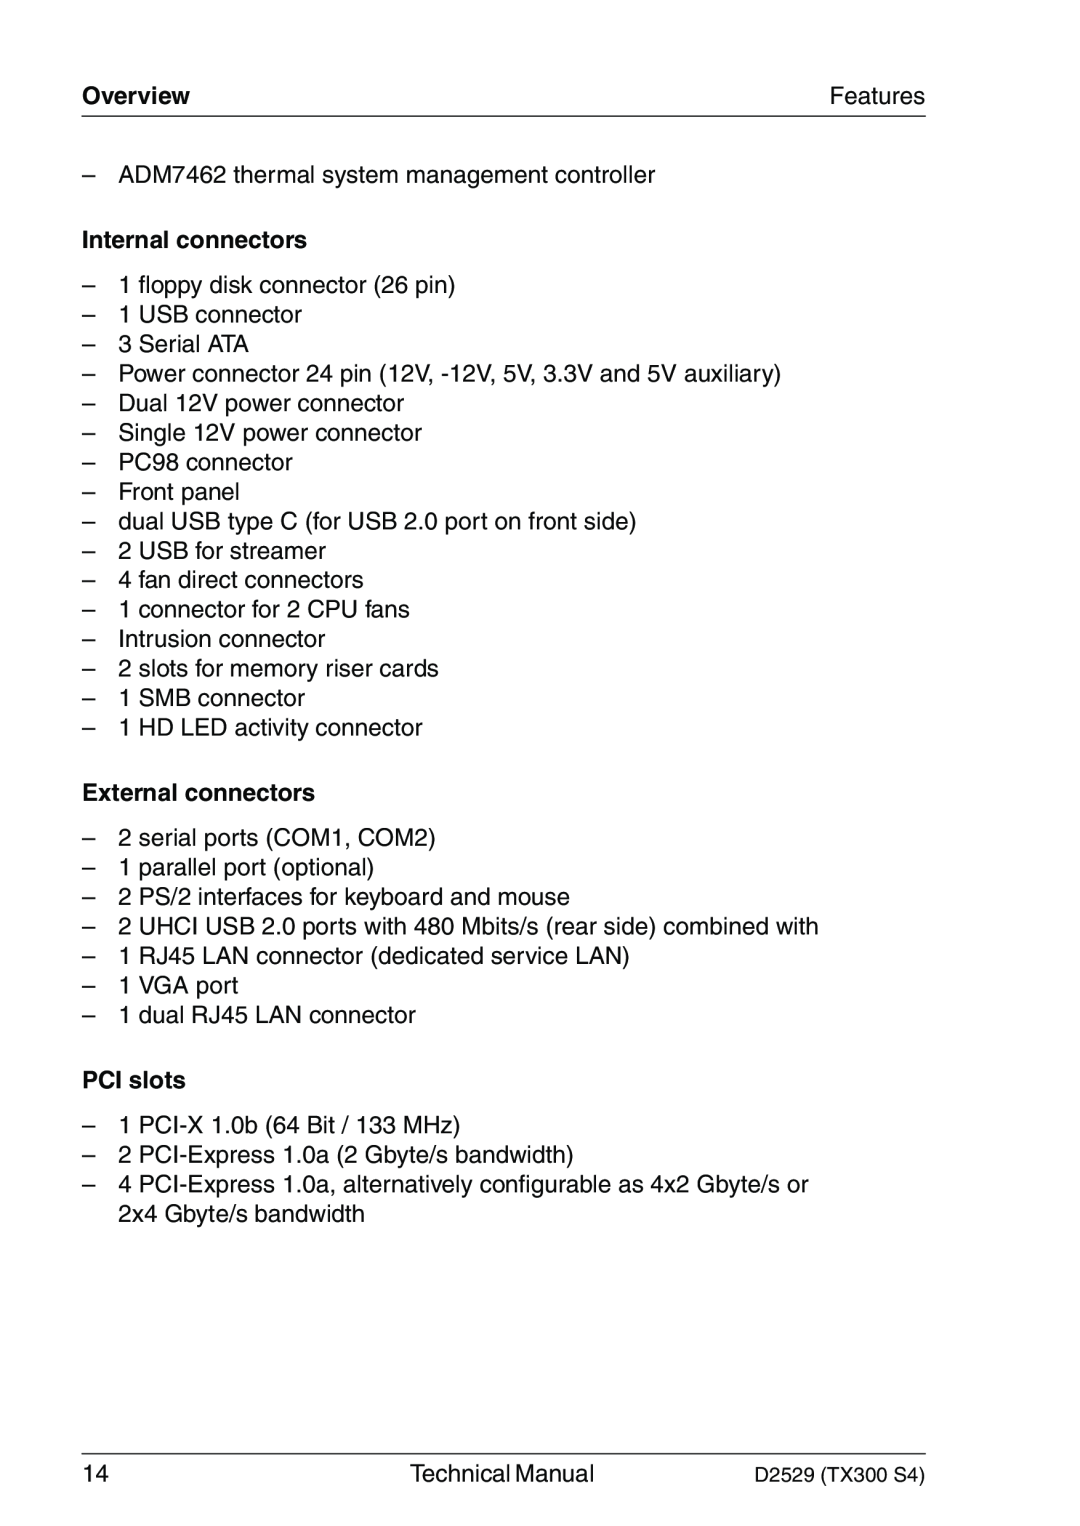 Fujitsu D2529 technical manual Overview, Internal connectors, External connectors, PCI slots, Features 